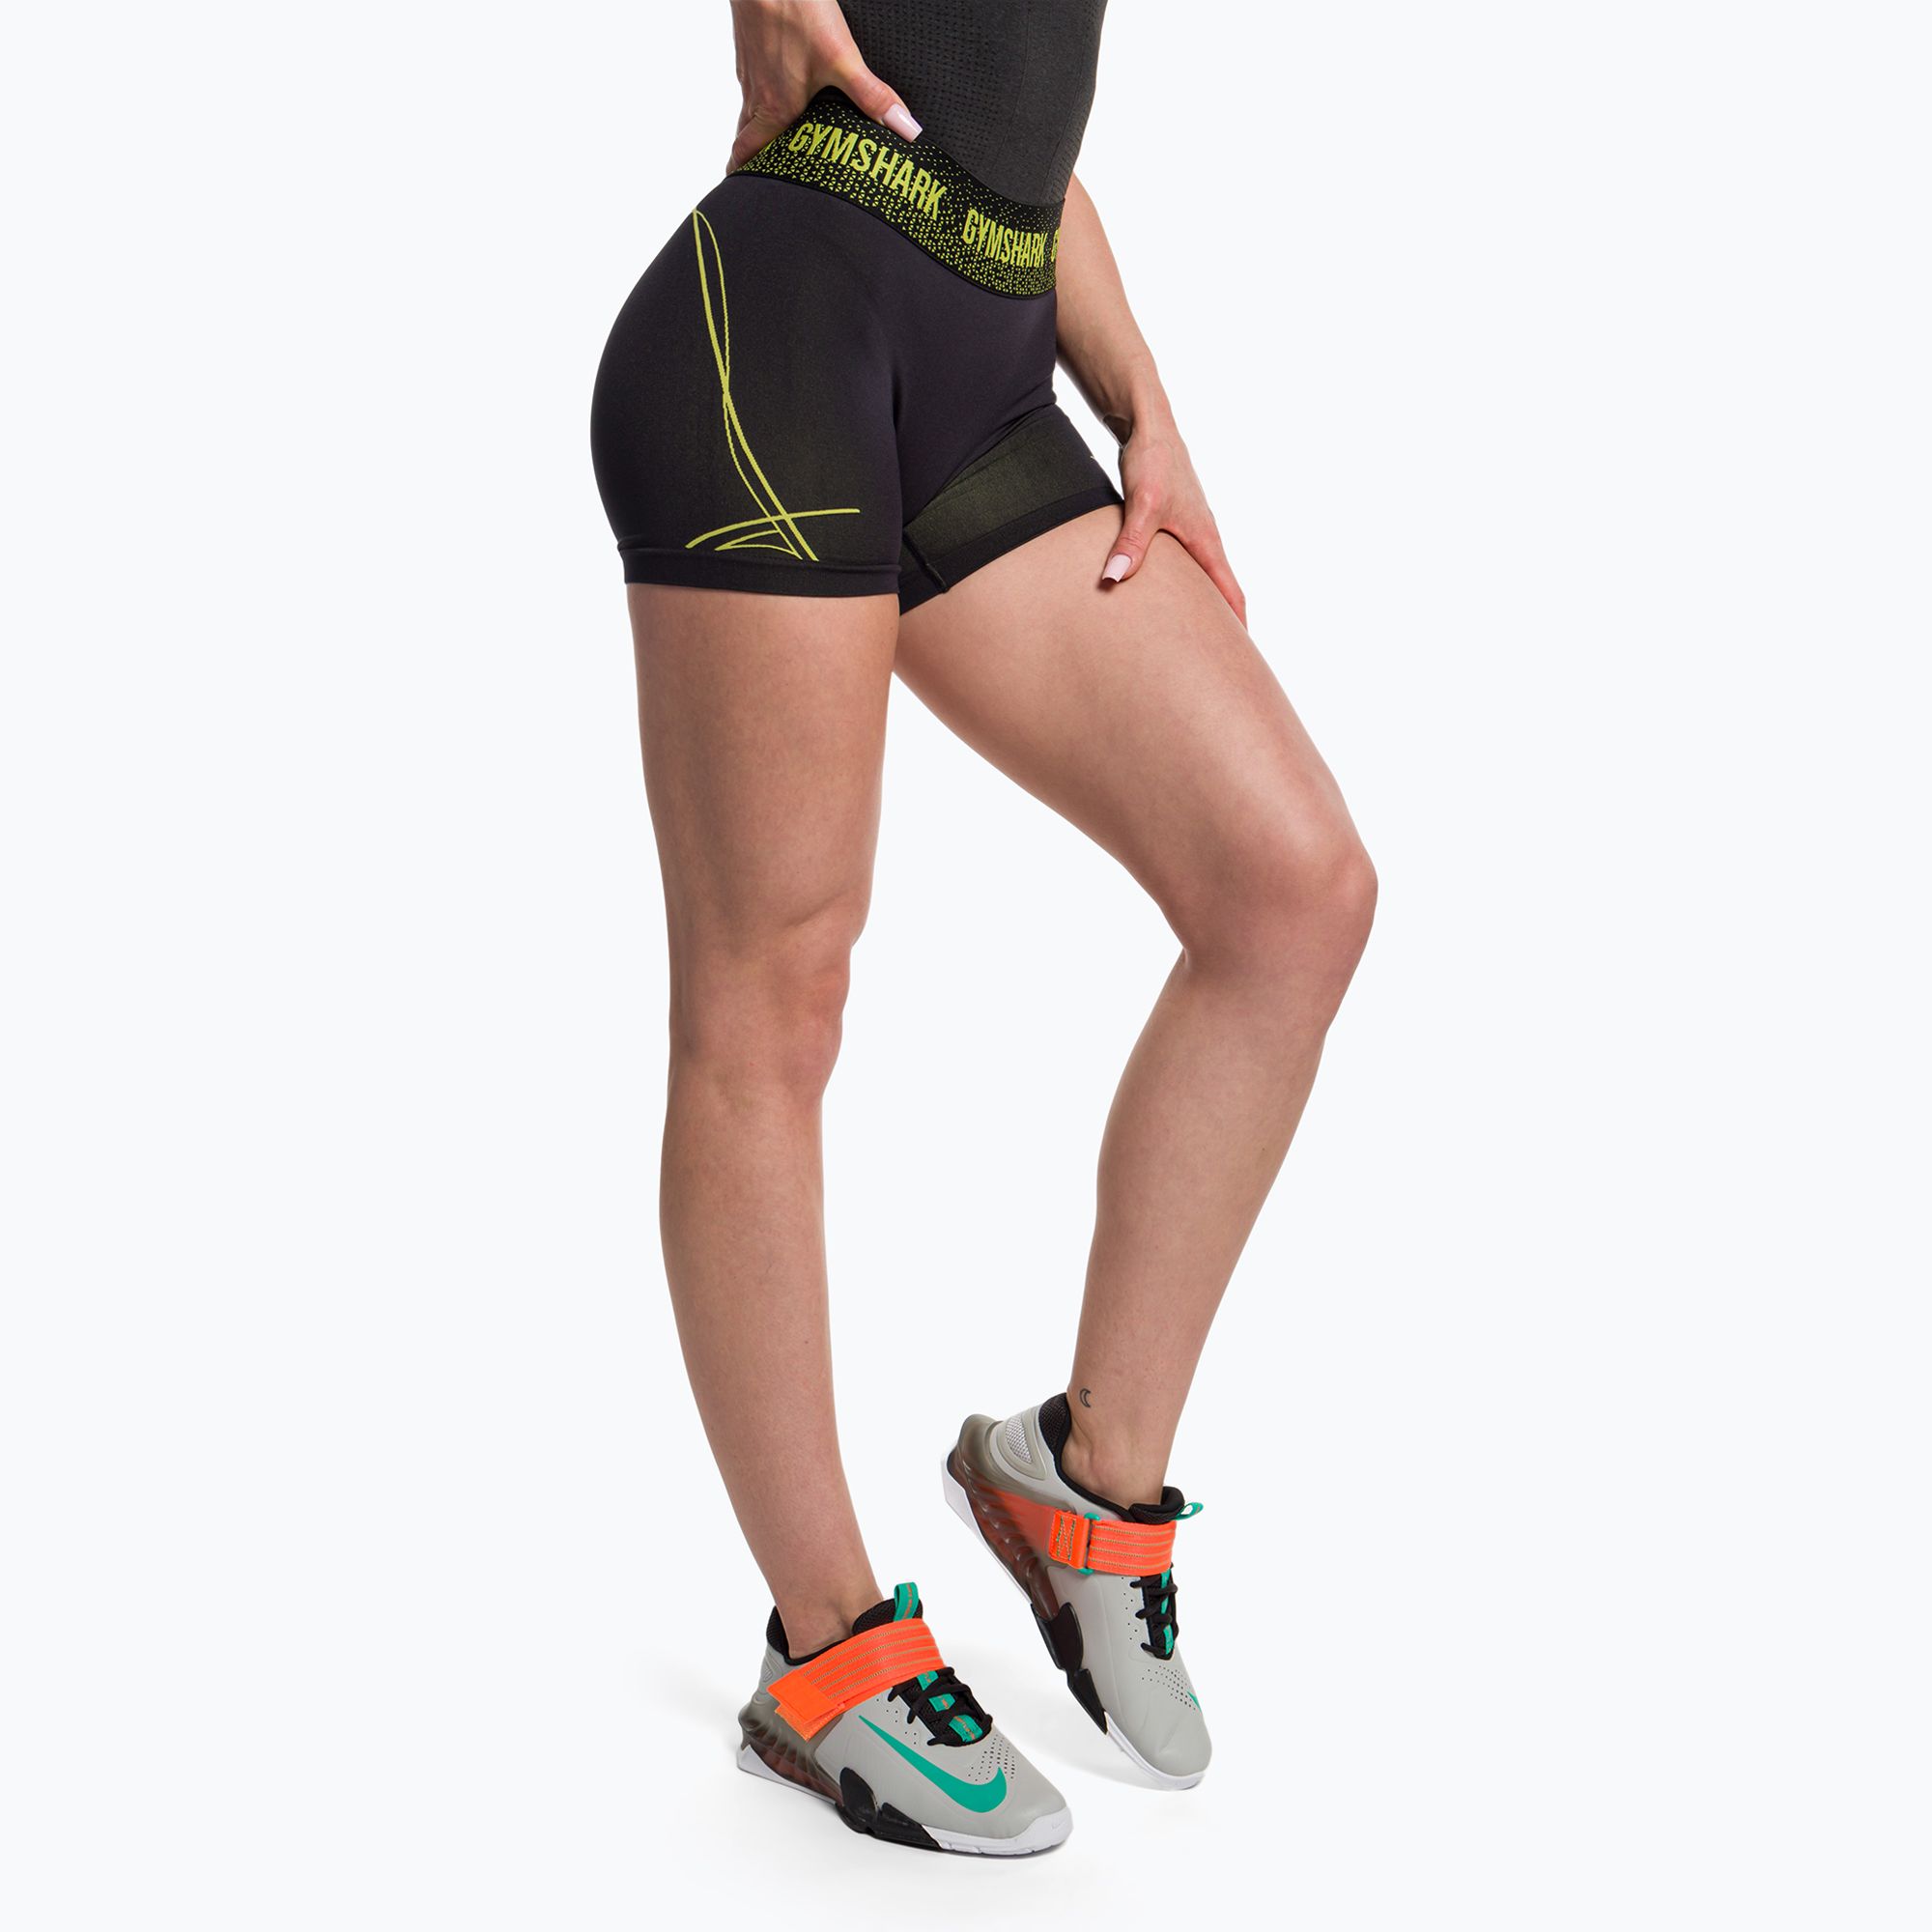 https://sportano.com/img/986c30c27a3d26a3ee16c136f92f4ff5/5/0/5057913529642_1-jpg/women-s-training-shorts-gymshark-apex-seamless-low-rise-green-black-0.jpg